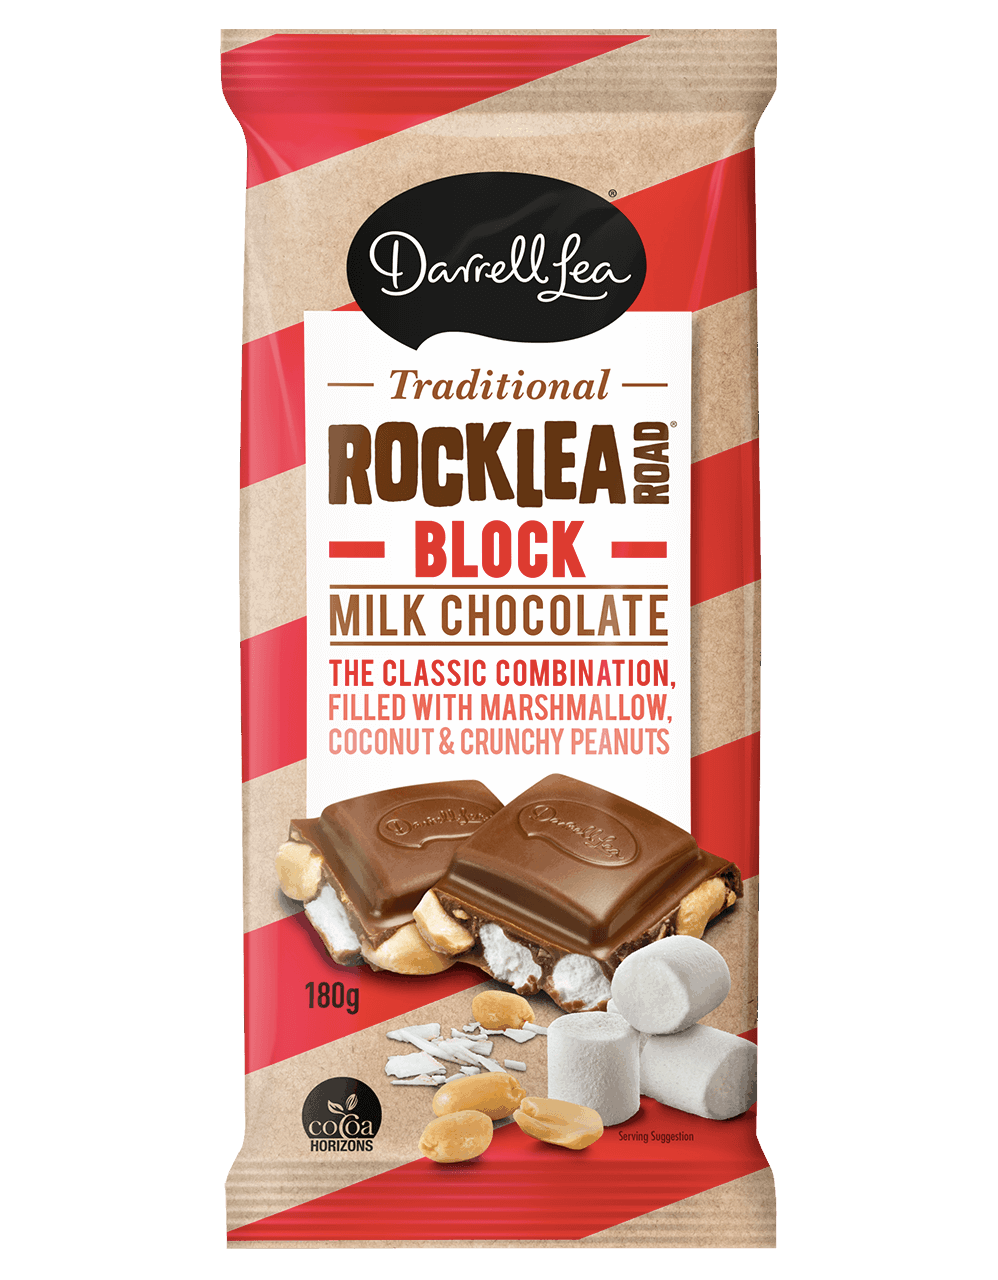 Darrell Lea Block Chocolate Rocklea Road 180g